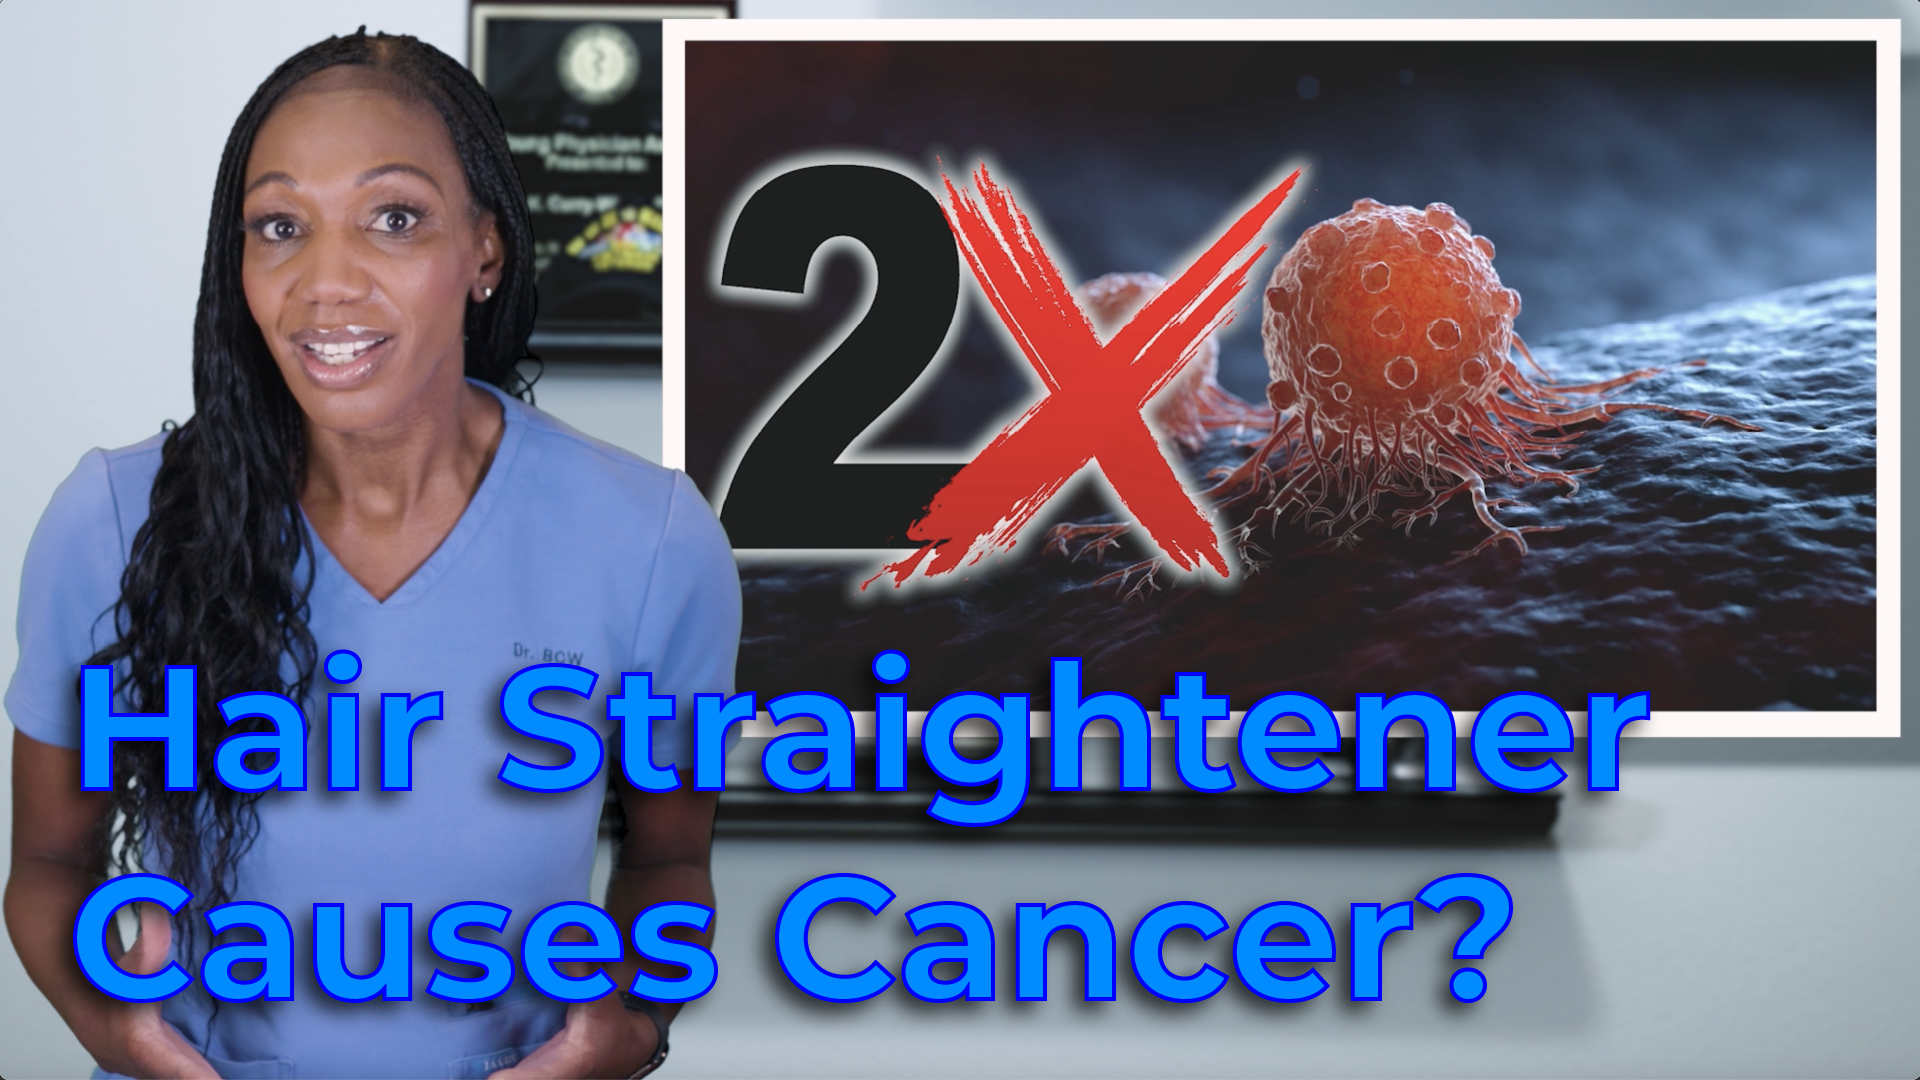 Hair Straightener Causes Cancer?